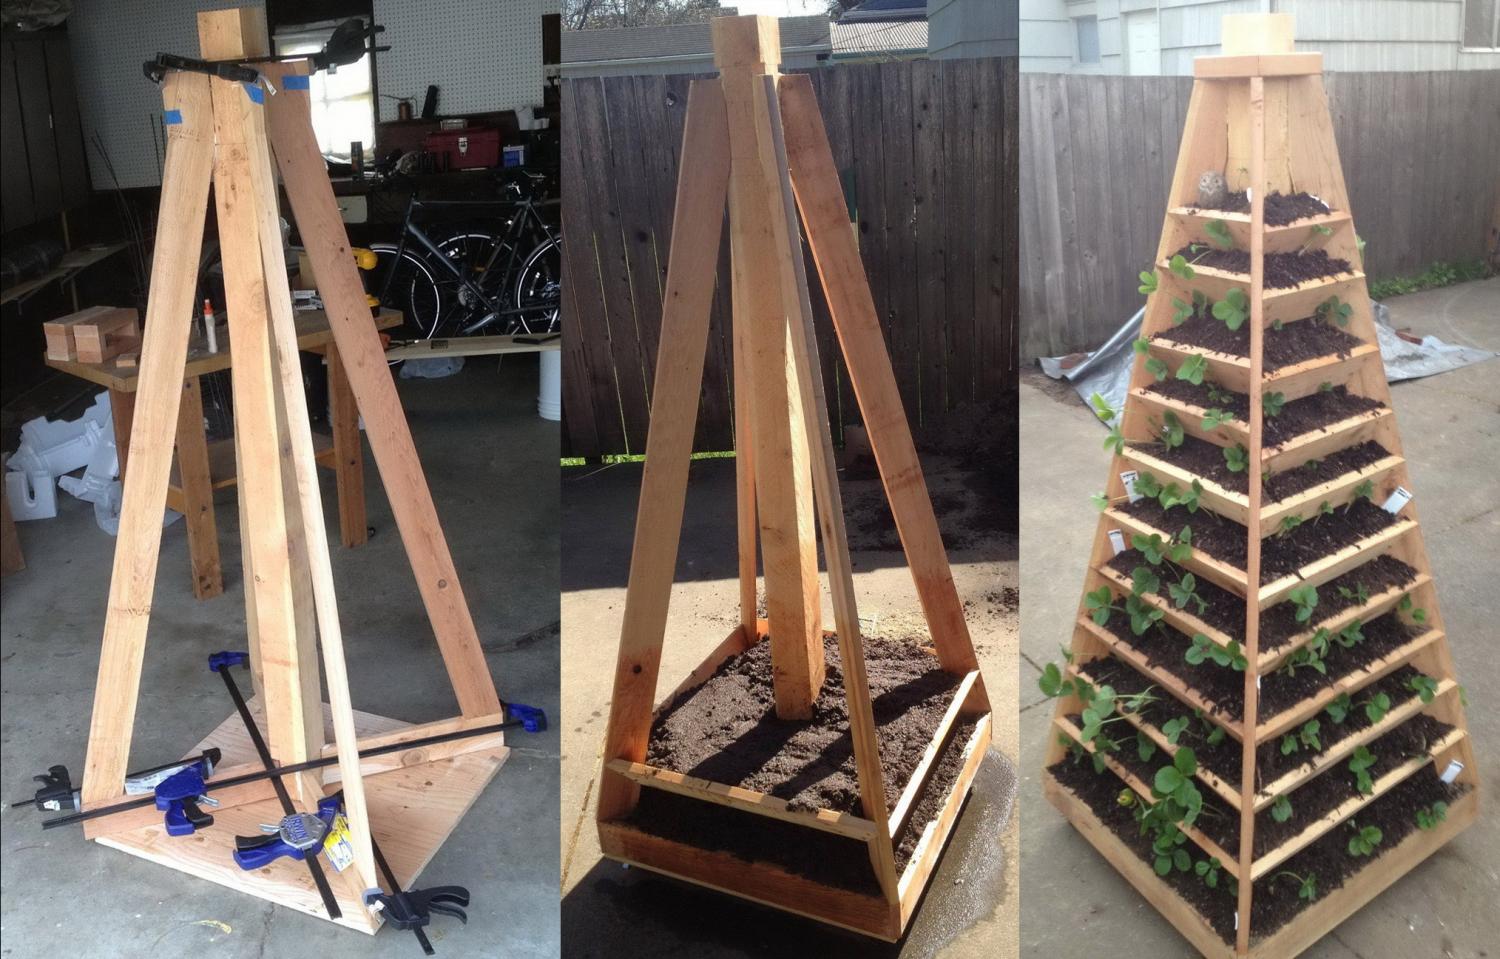 DIY Strawberry Pyramid Planter - Vertical wooden strawberry planter